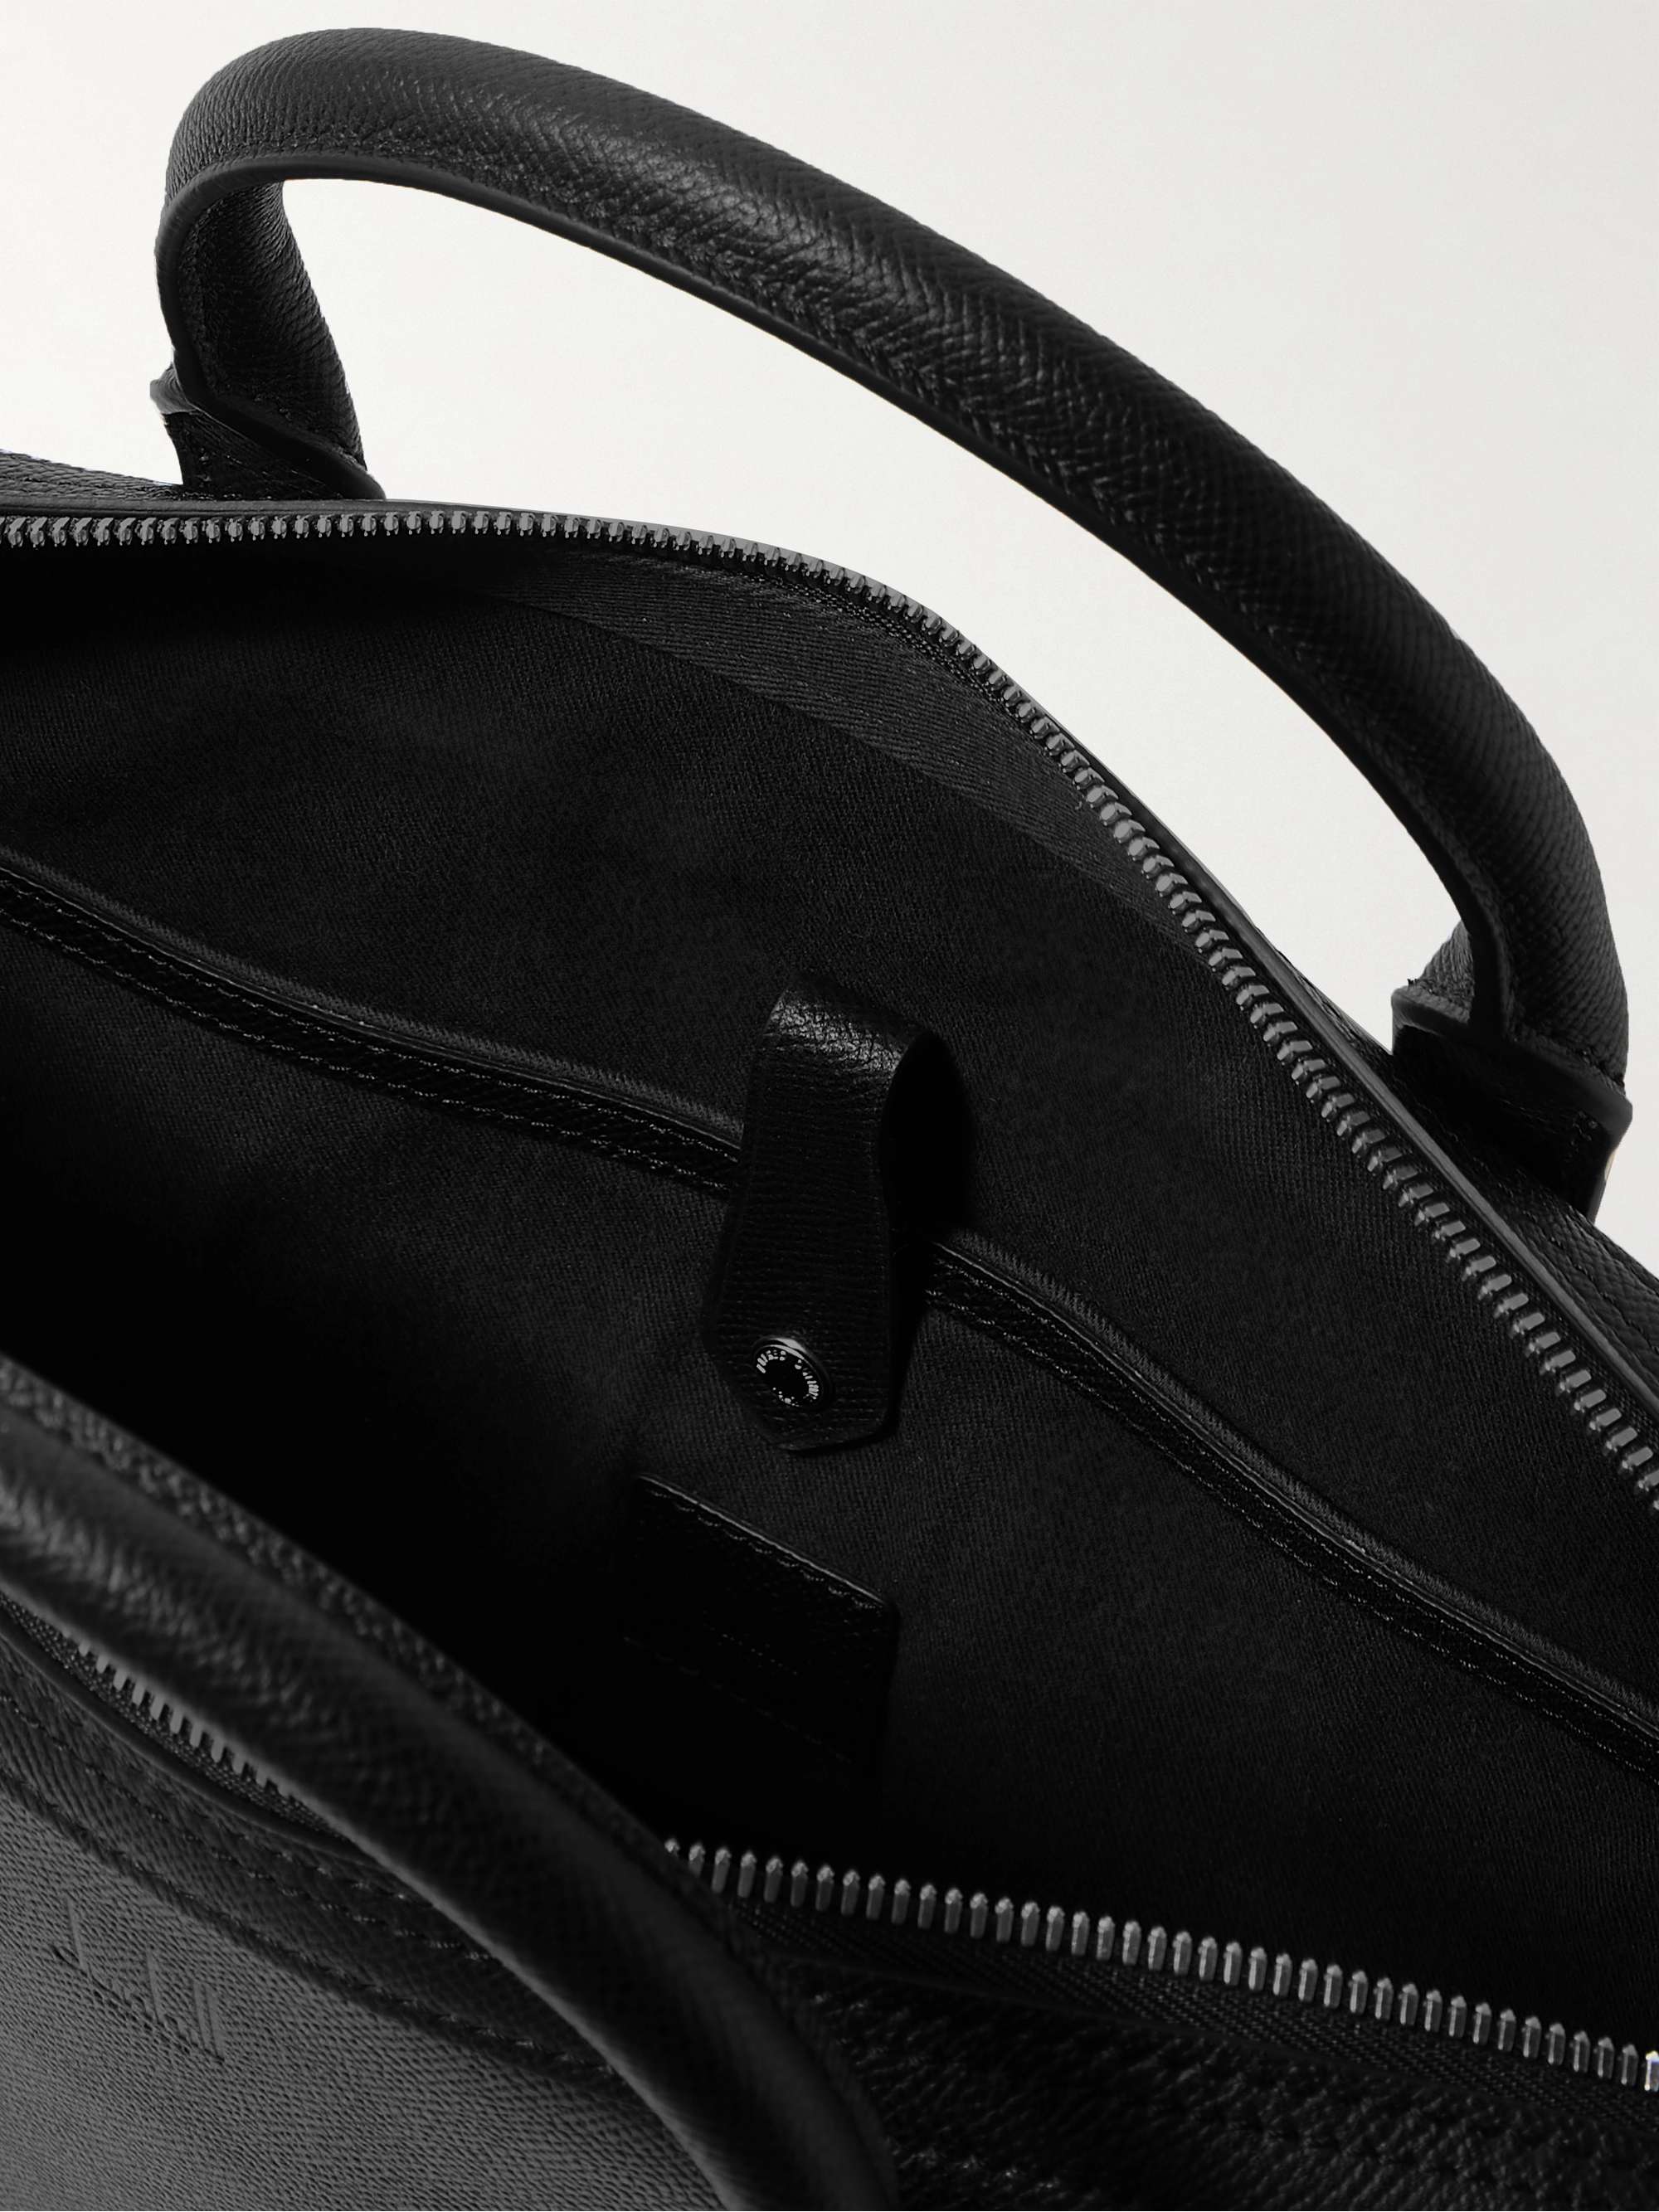 DUNHILL Cadogan Textured-Leather Briefcase